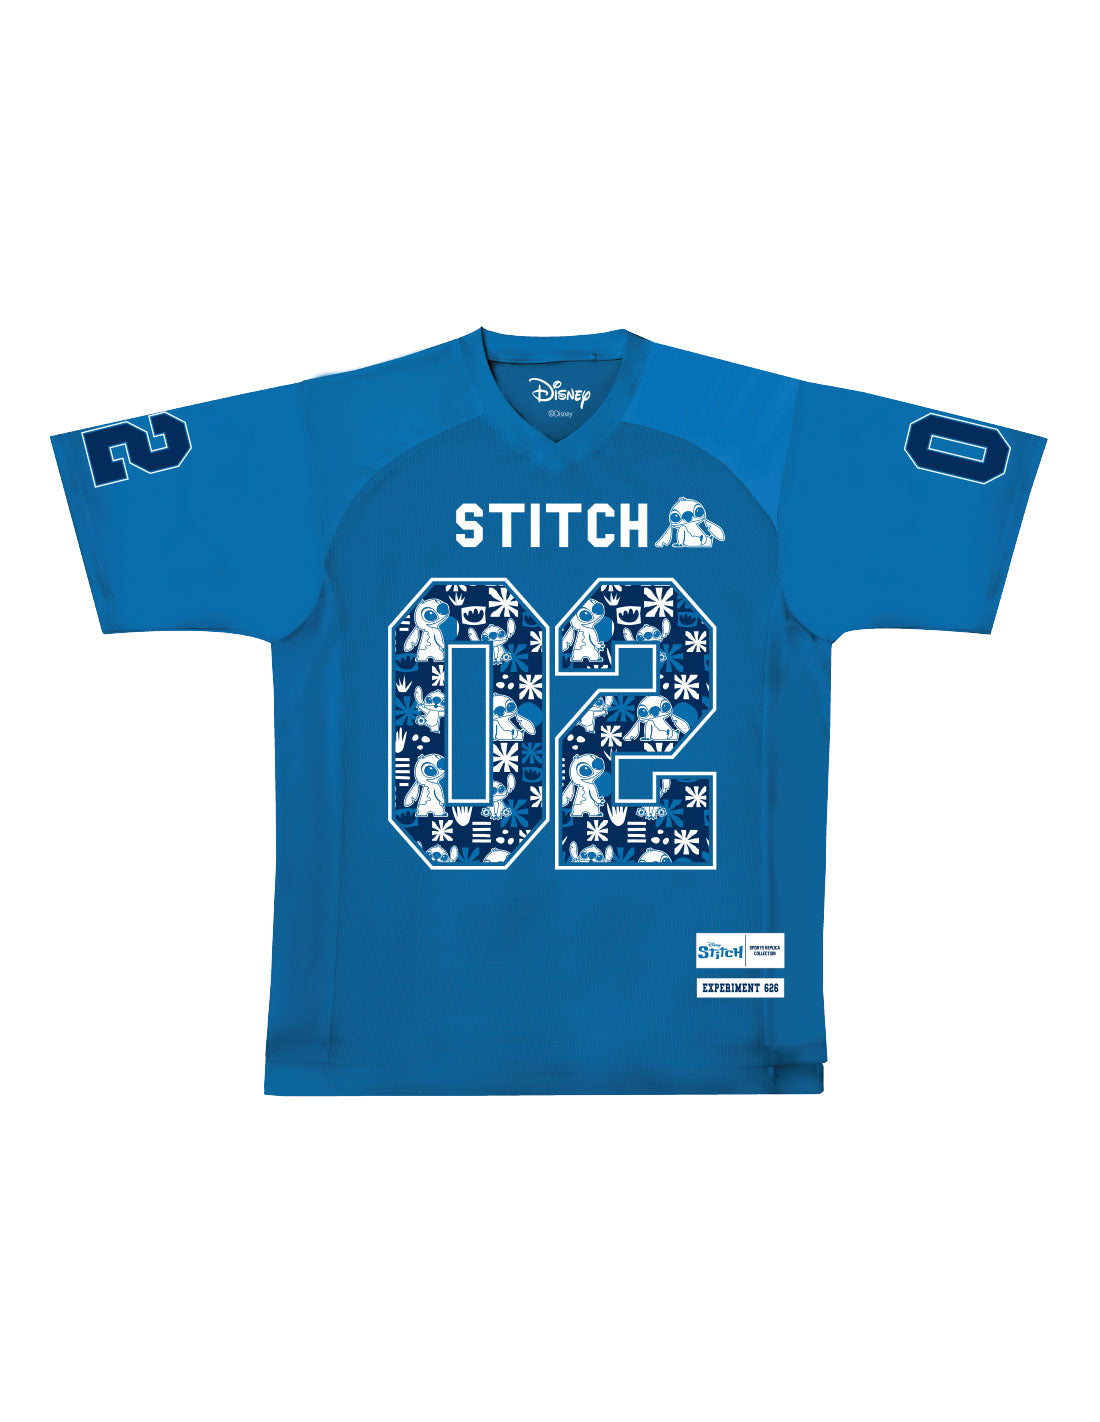 T-shirt Sport Disney - Stitch Experiment 626